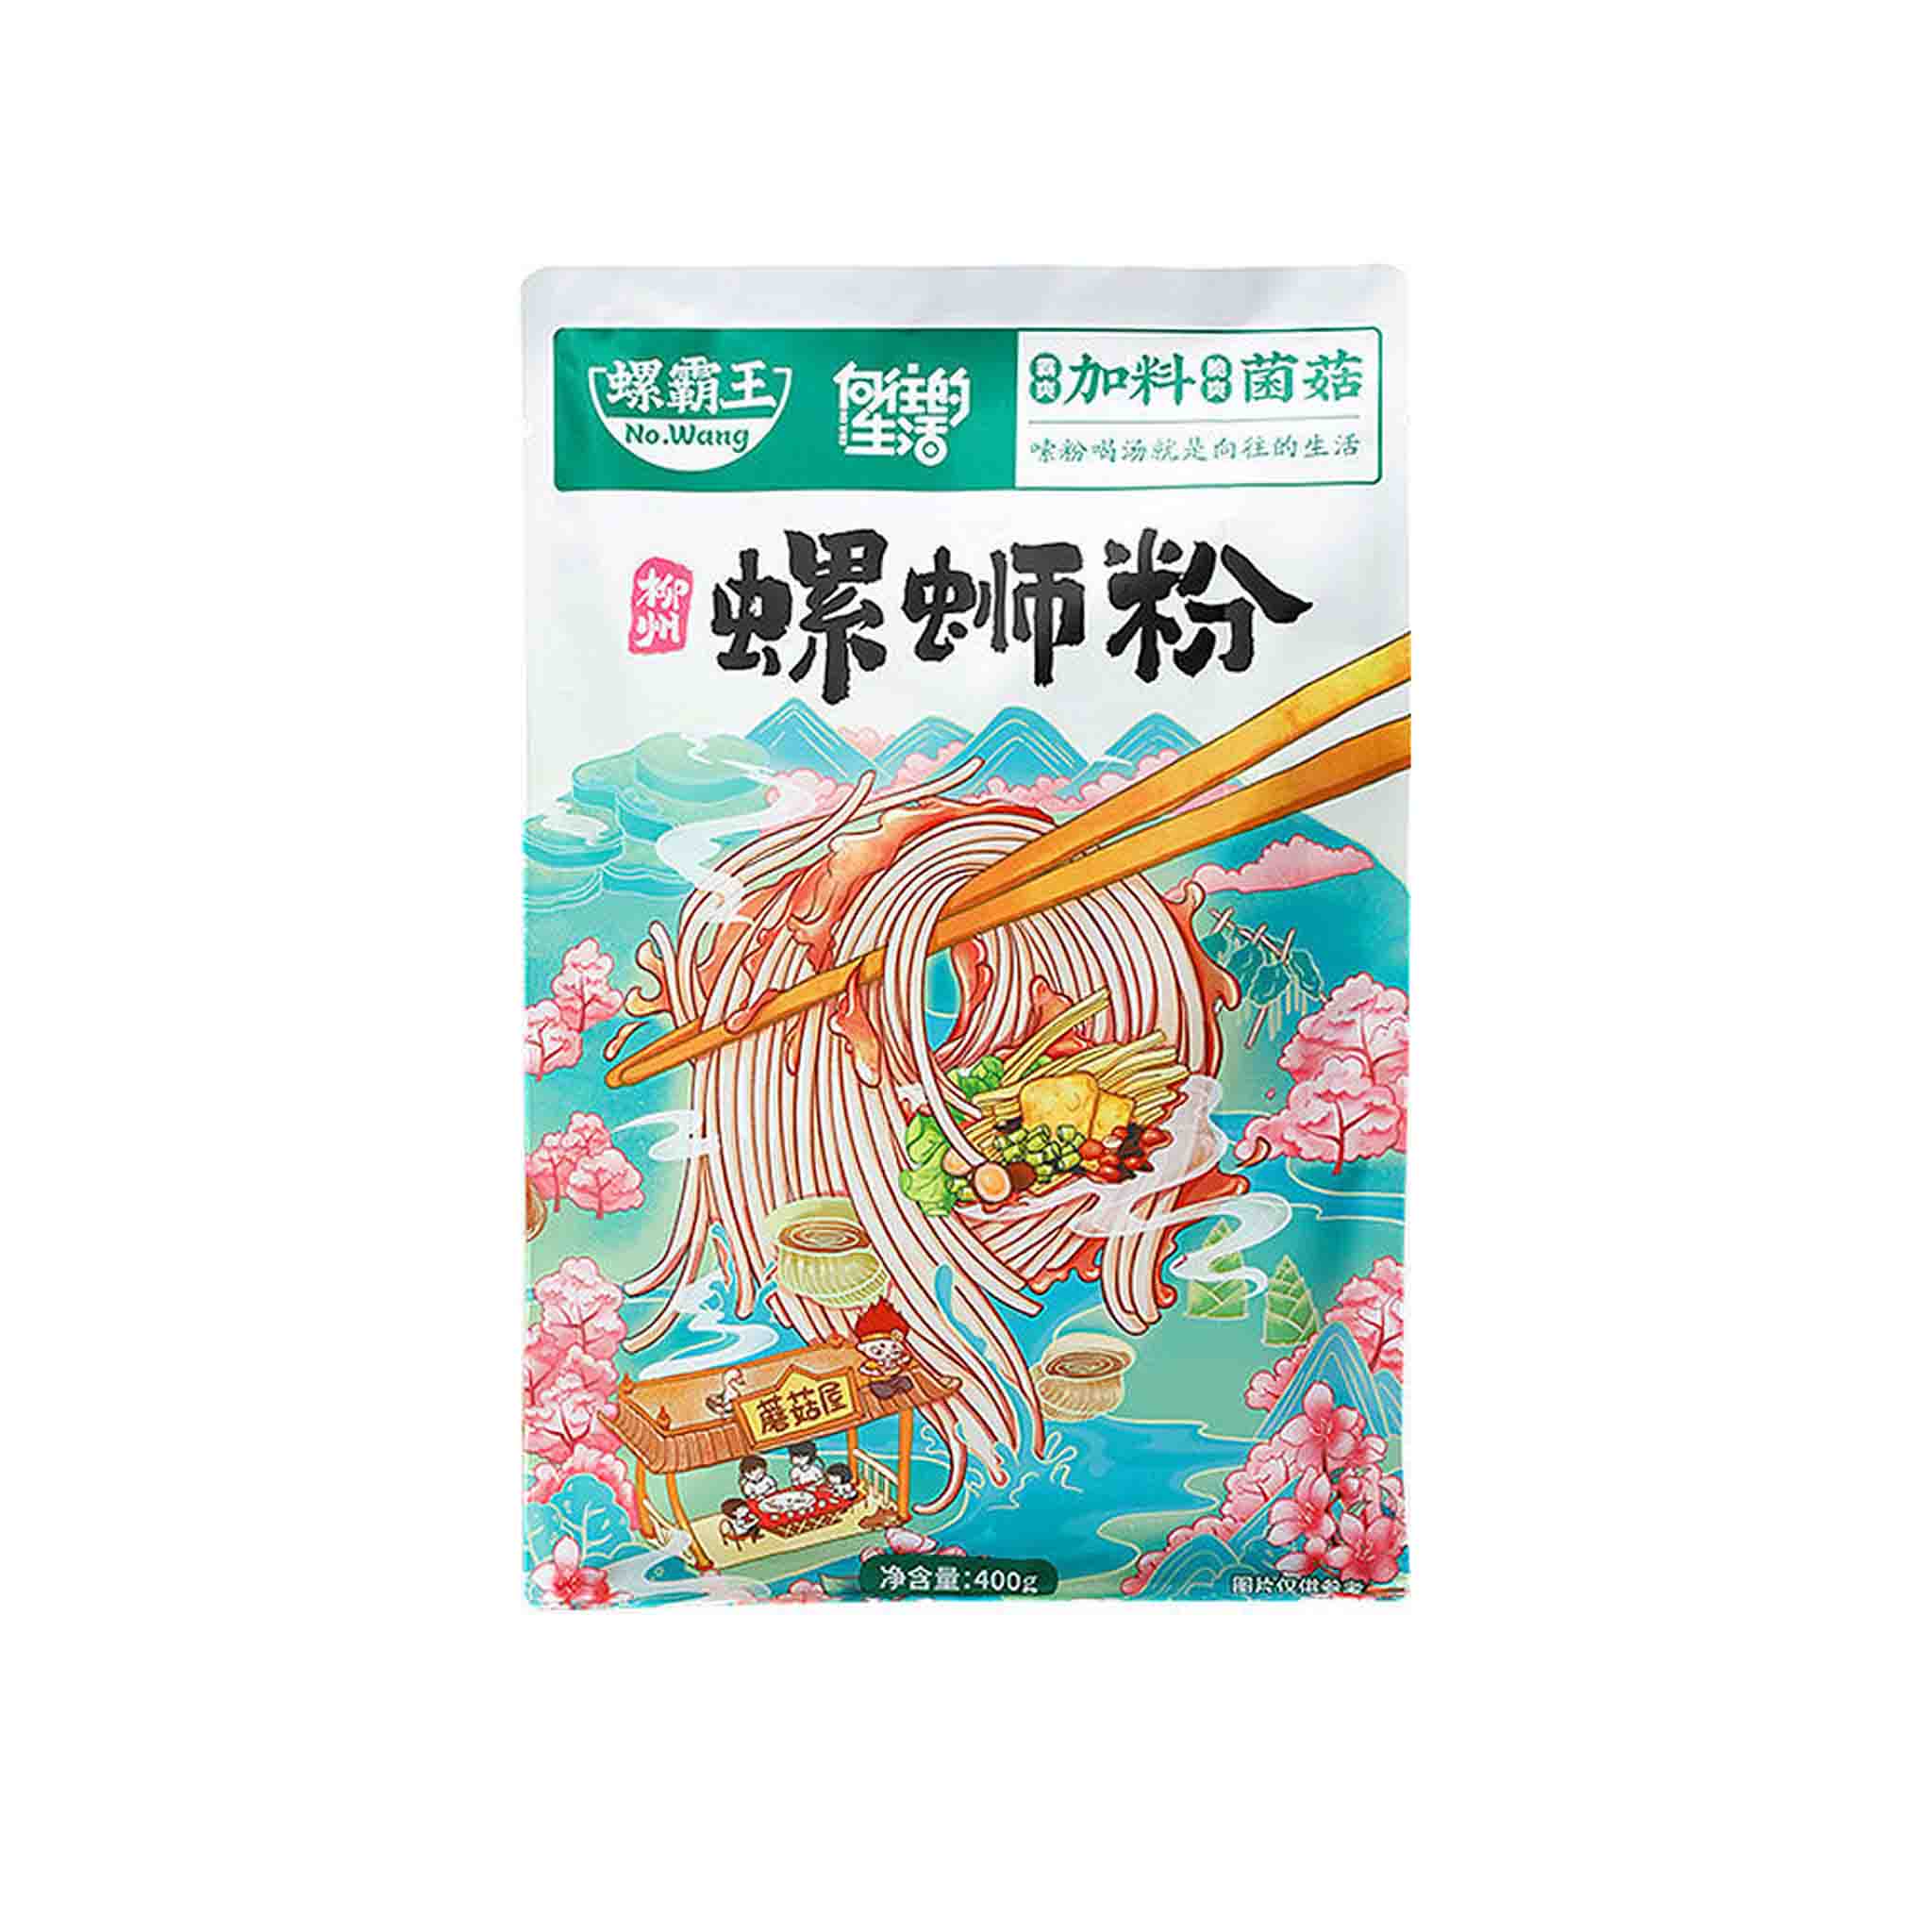 螺霸王 菌菇螺蛳粉 No.Wang Luosifen Rice Noodles With Snail Soup Broth Mushroom Flavour 400g